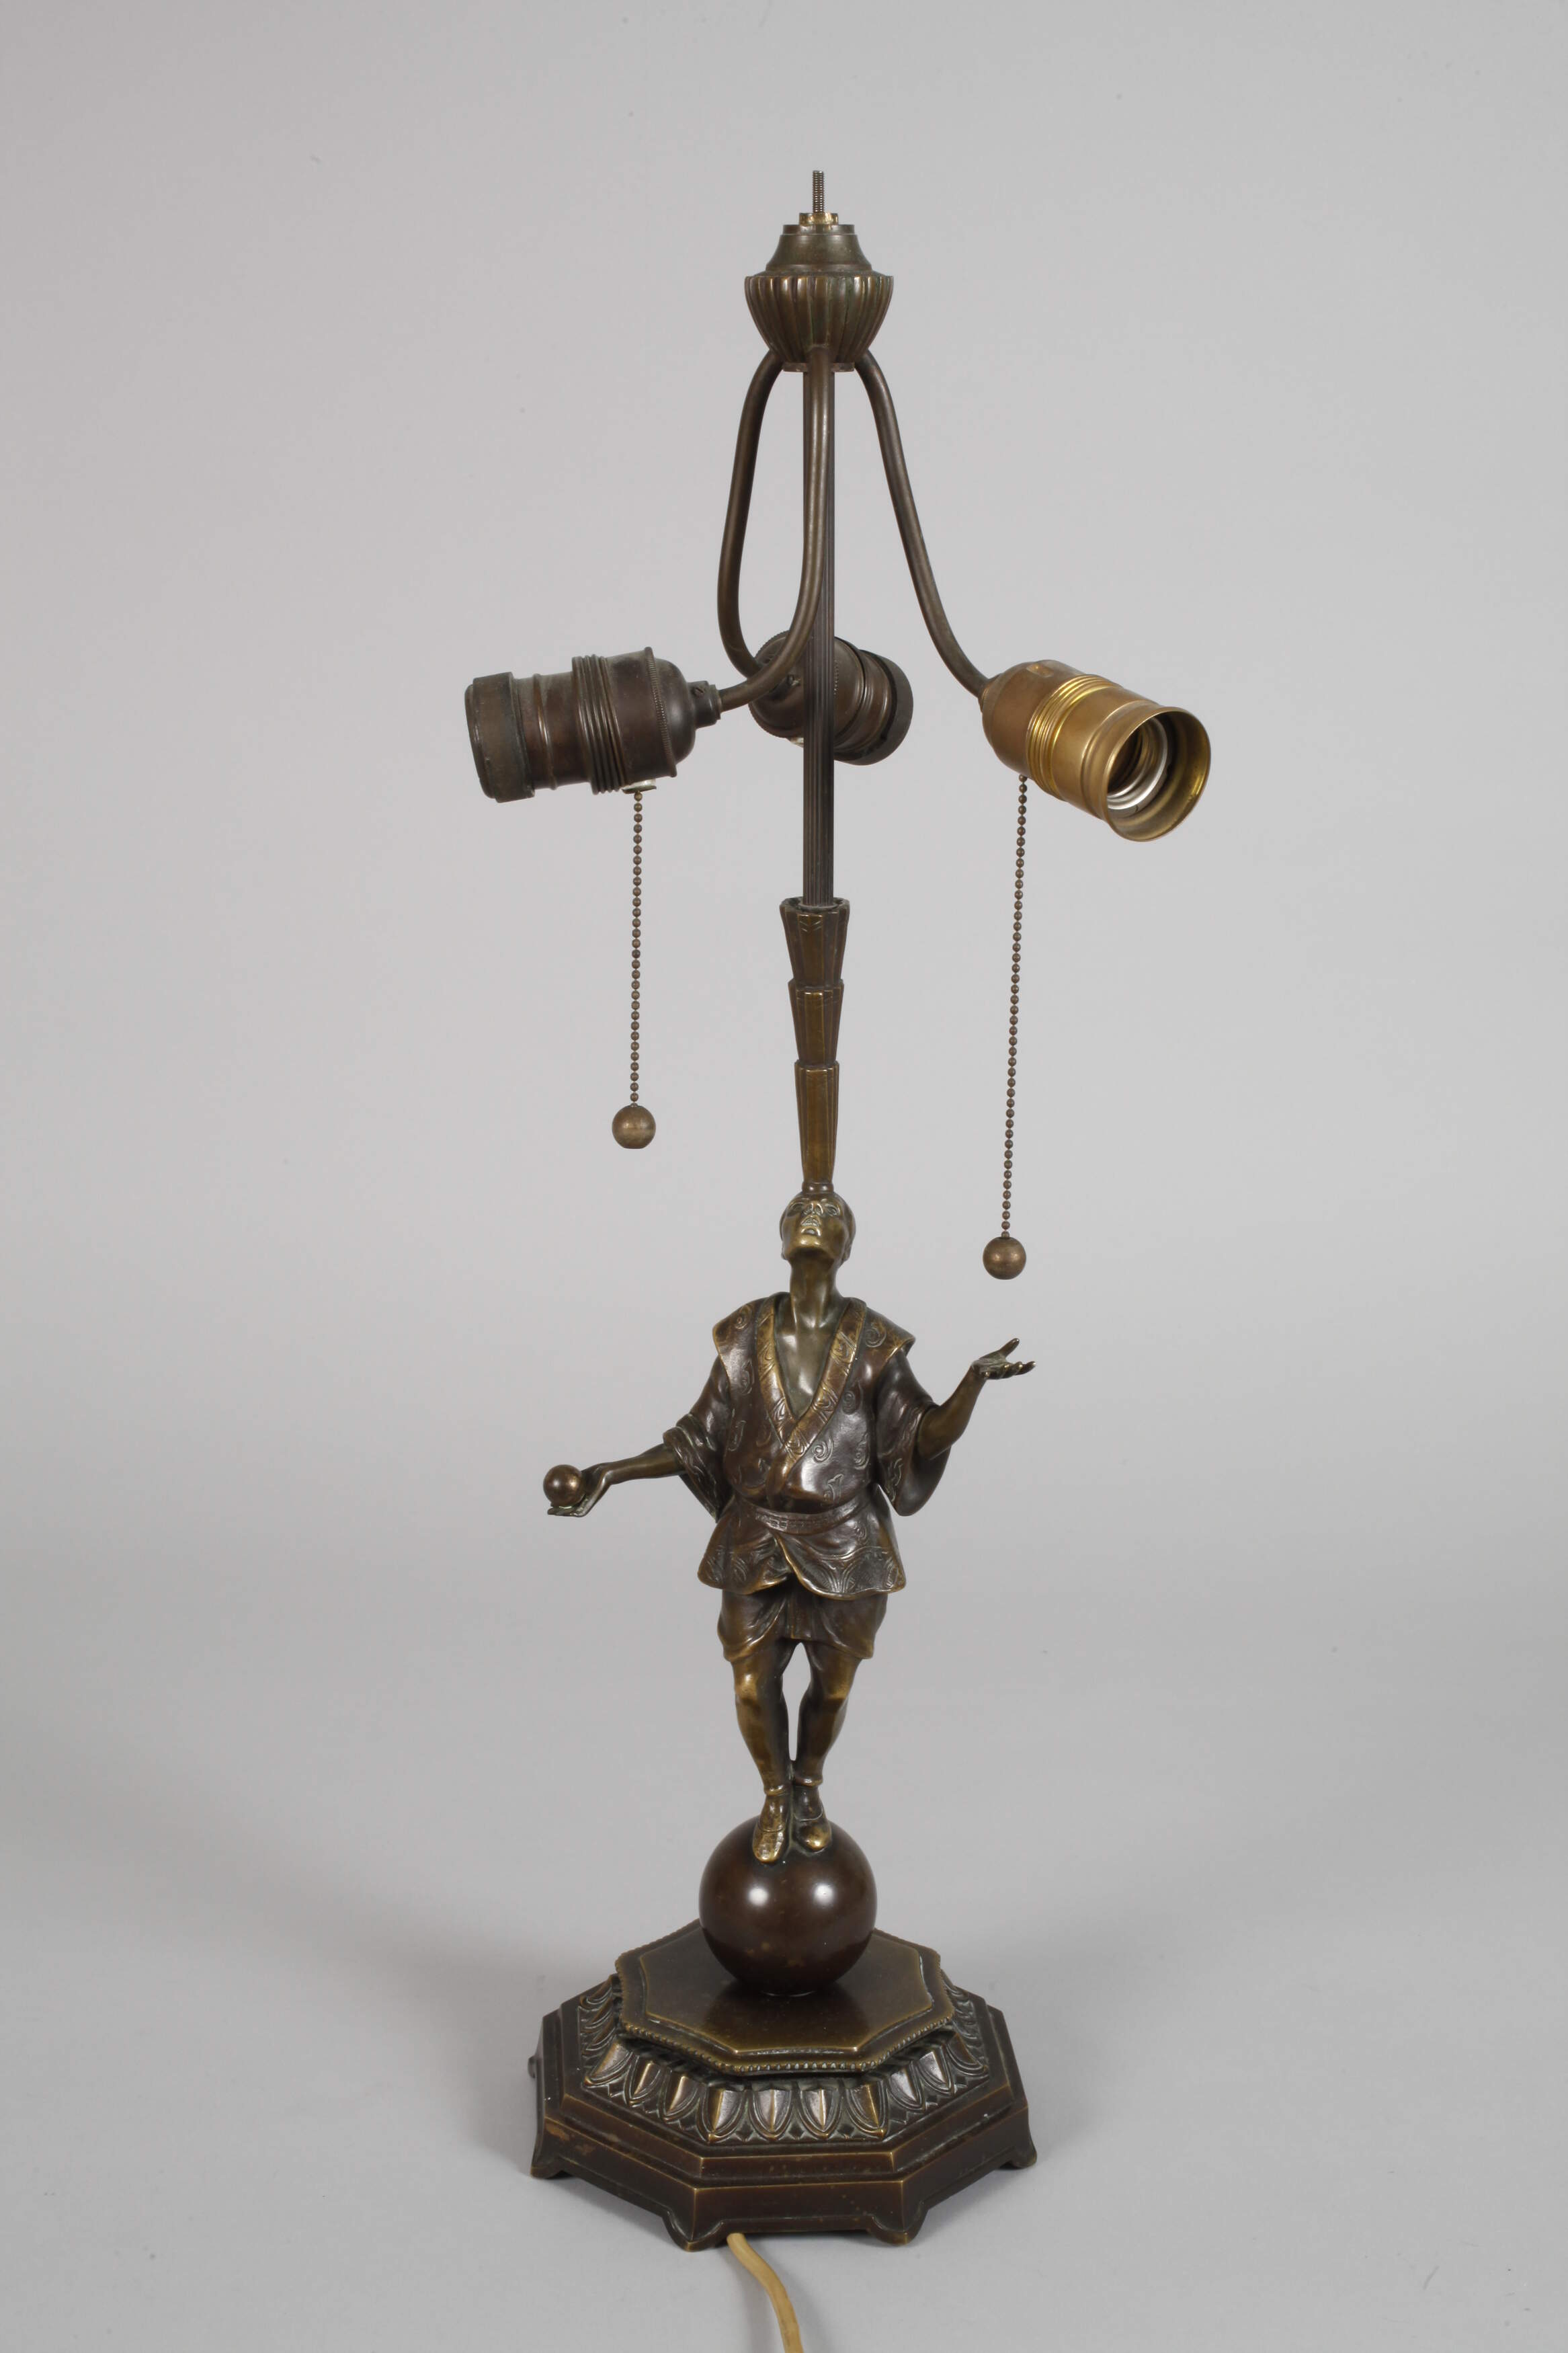 Roland Paris, figurative table lamp "Jongleur" - Image 2 of 6